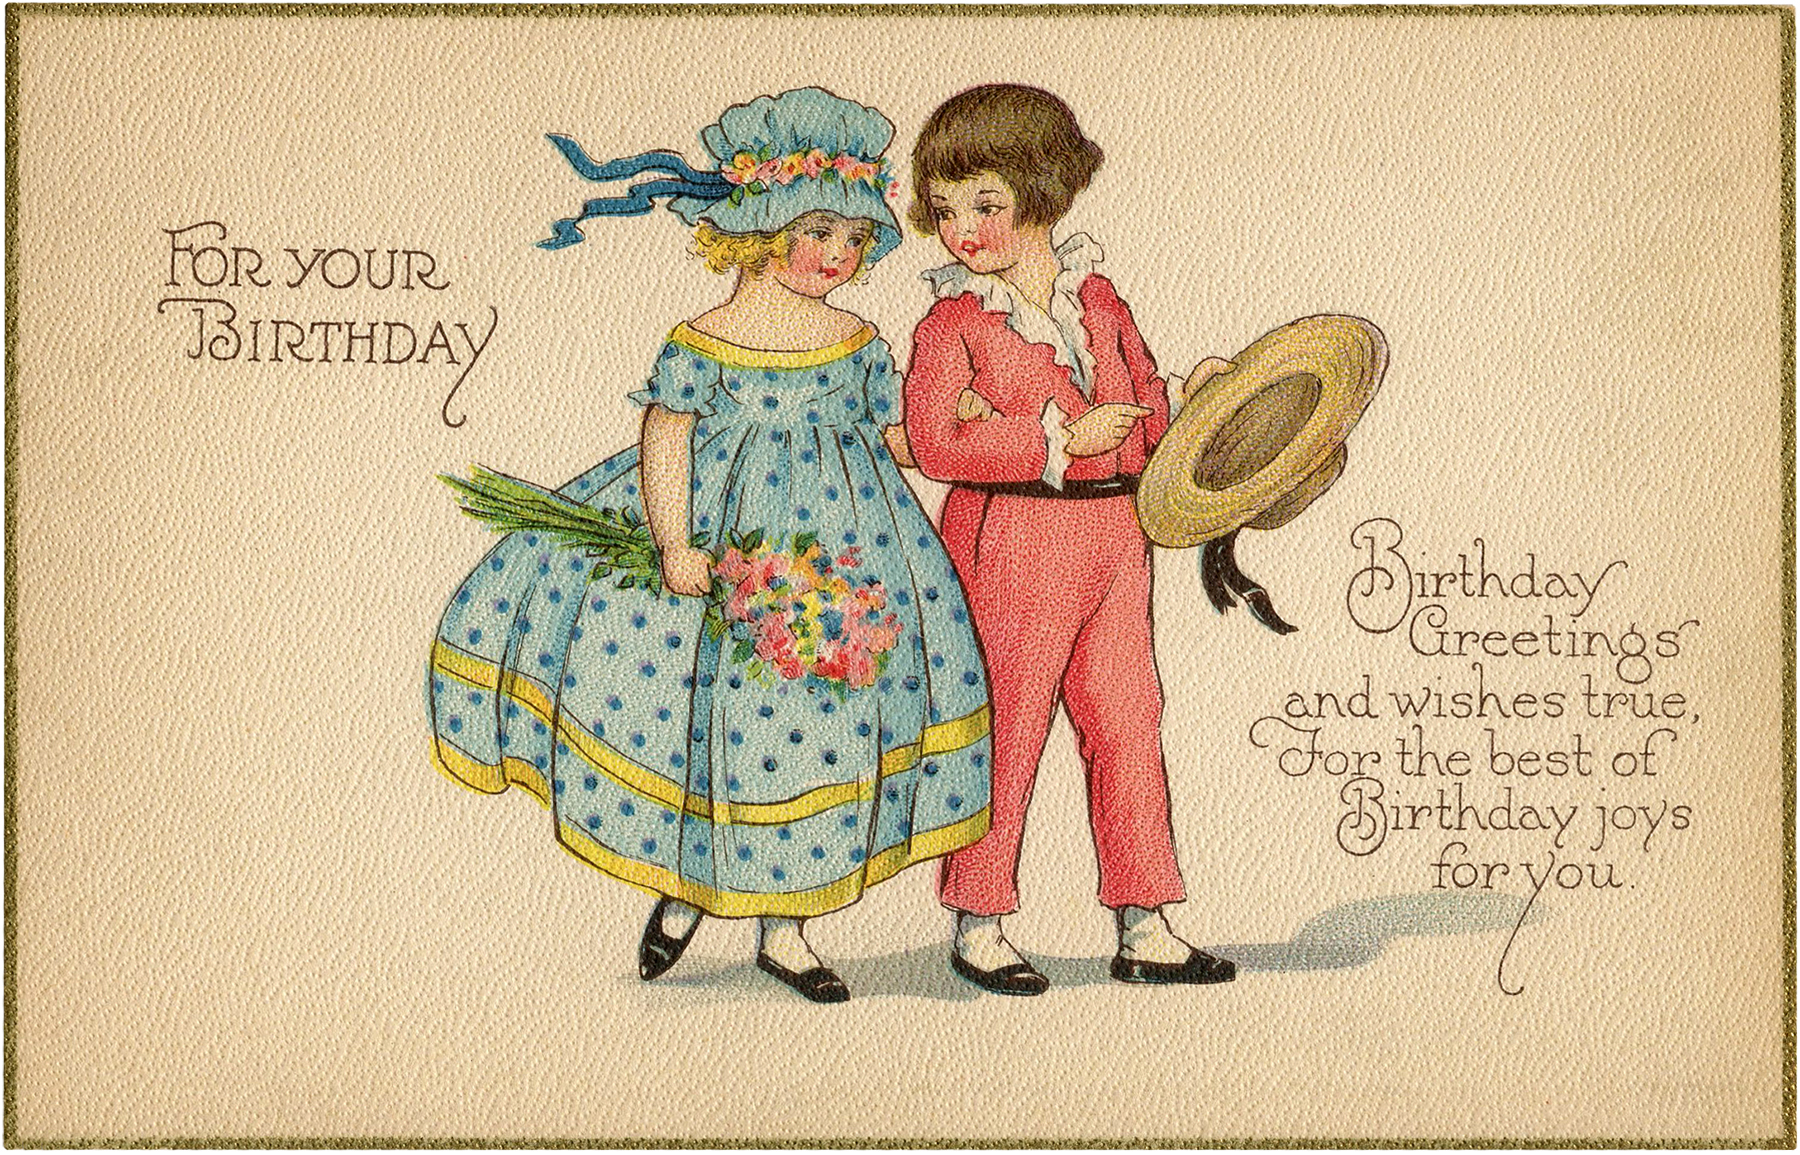 Vintage Birthday Card Image! - The Graphics Fairy